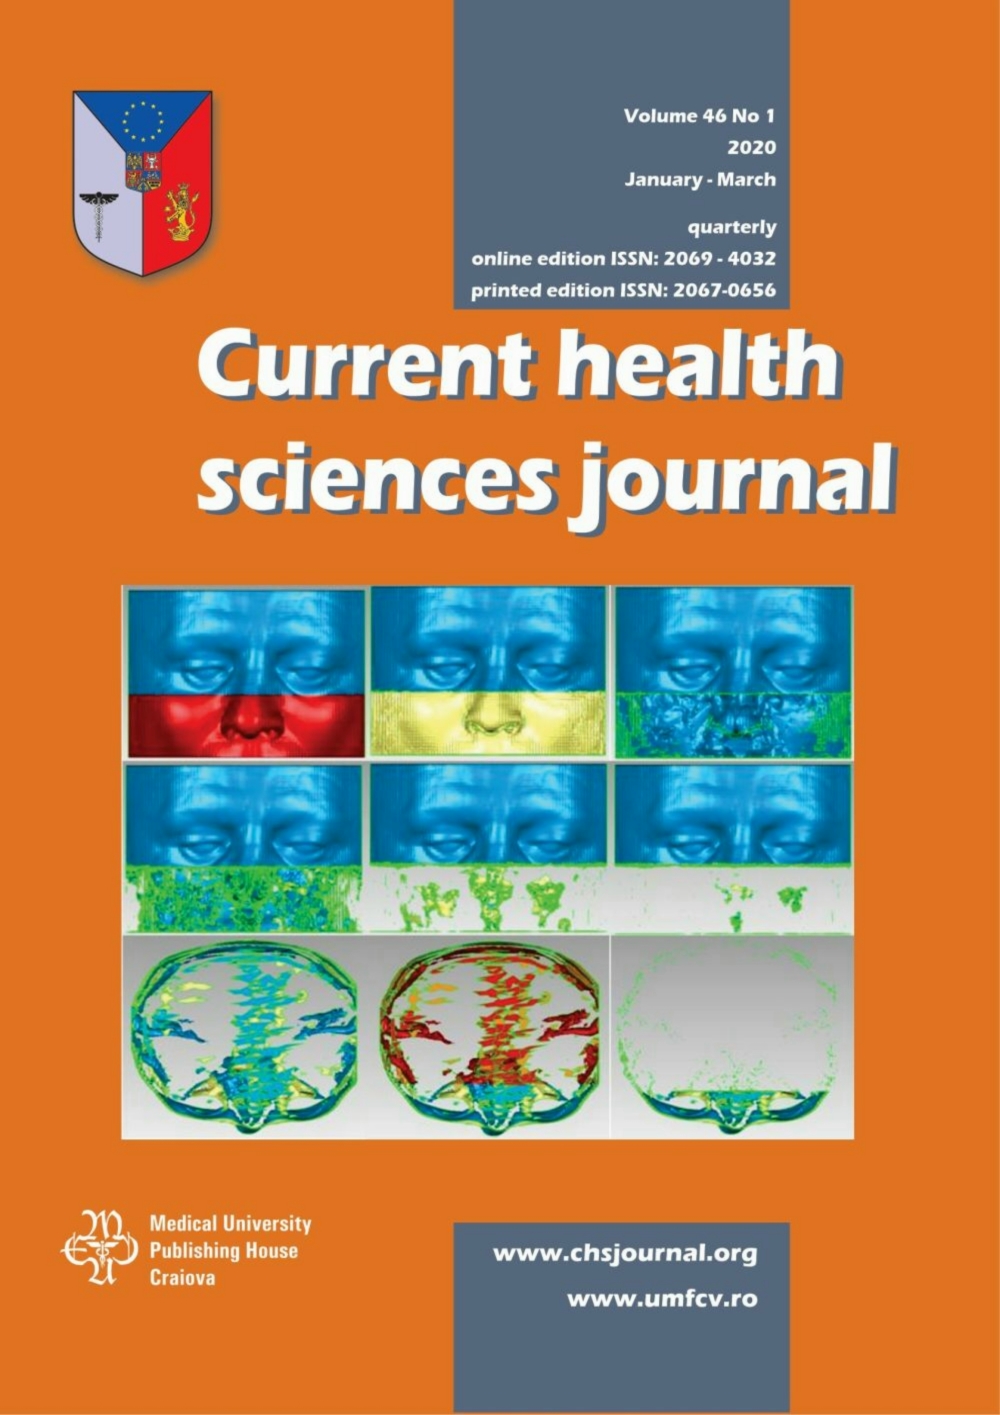 Current Health Sciences Journal, vol. 46 no. 1, 2020